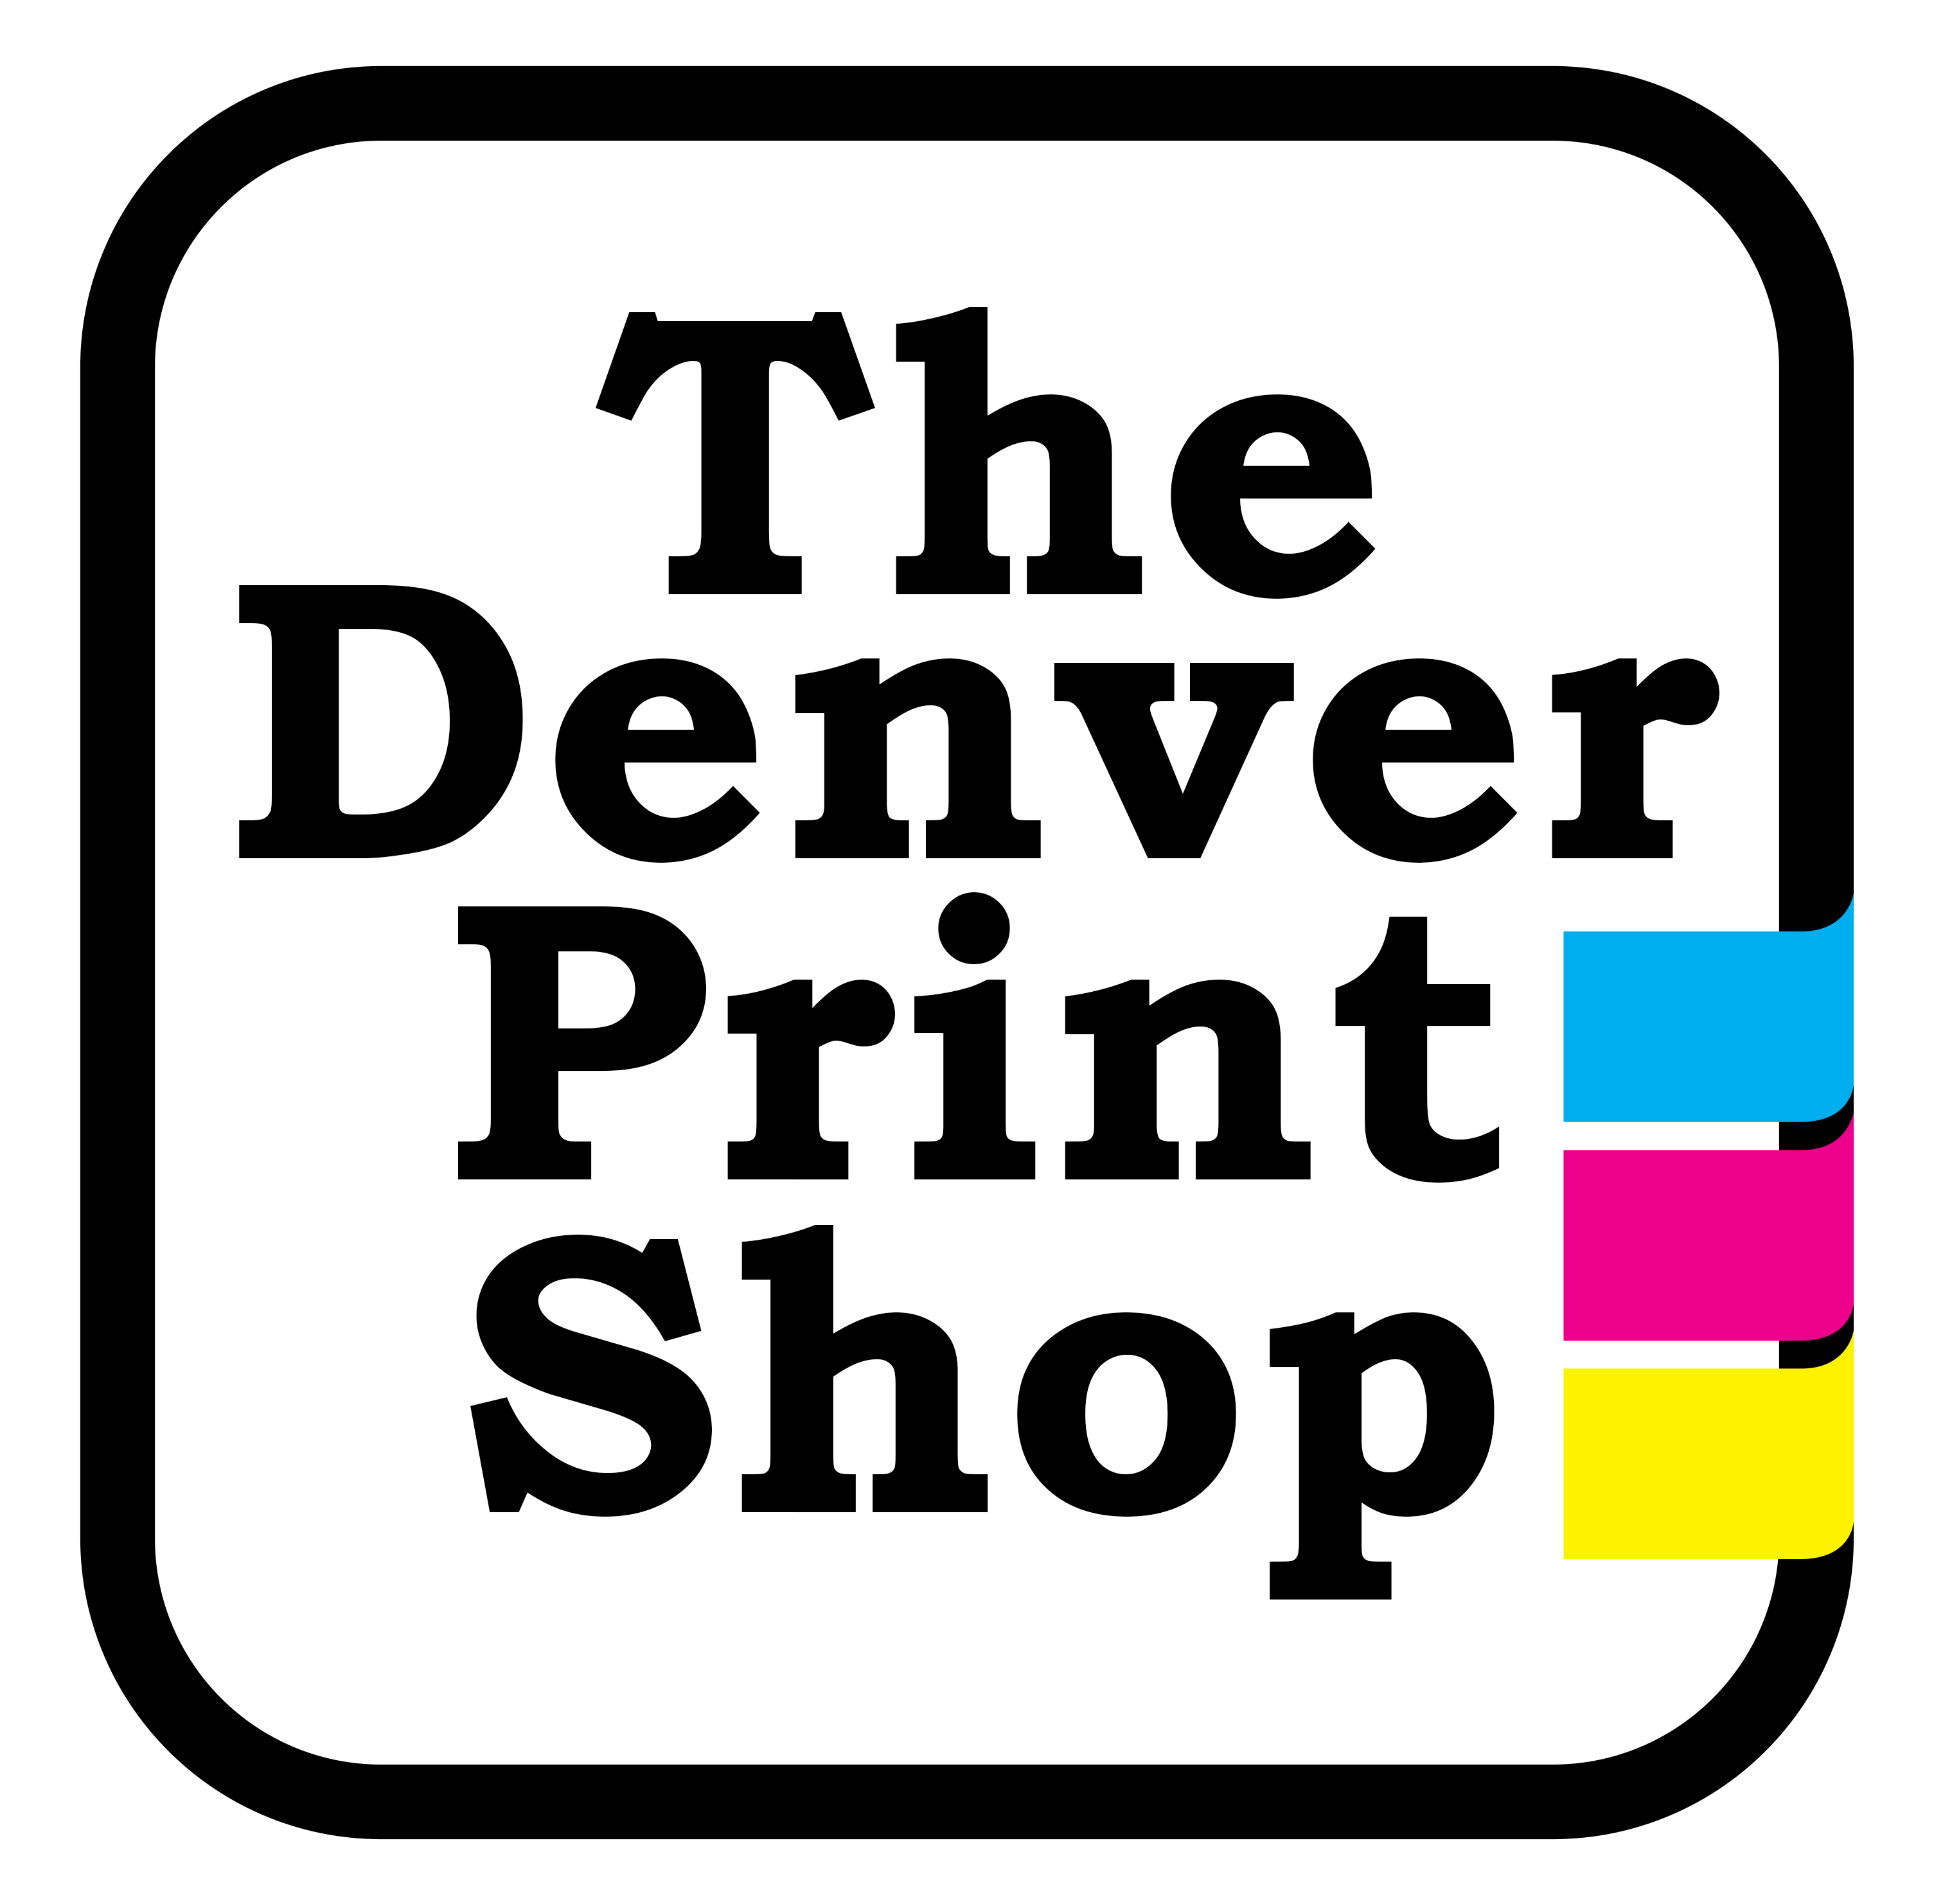 The Denver Print Shop